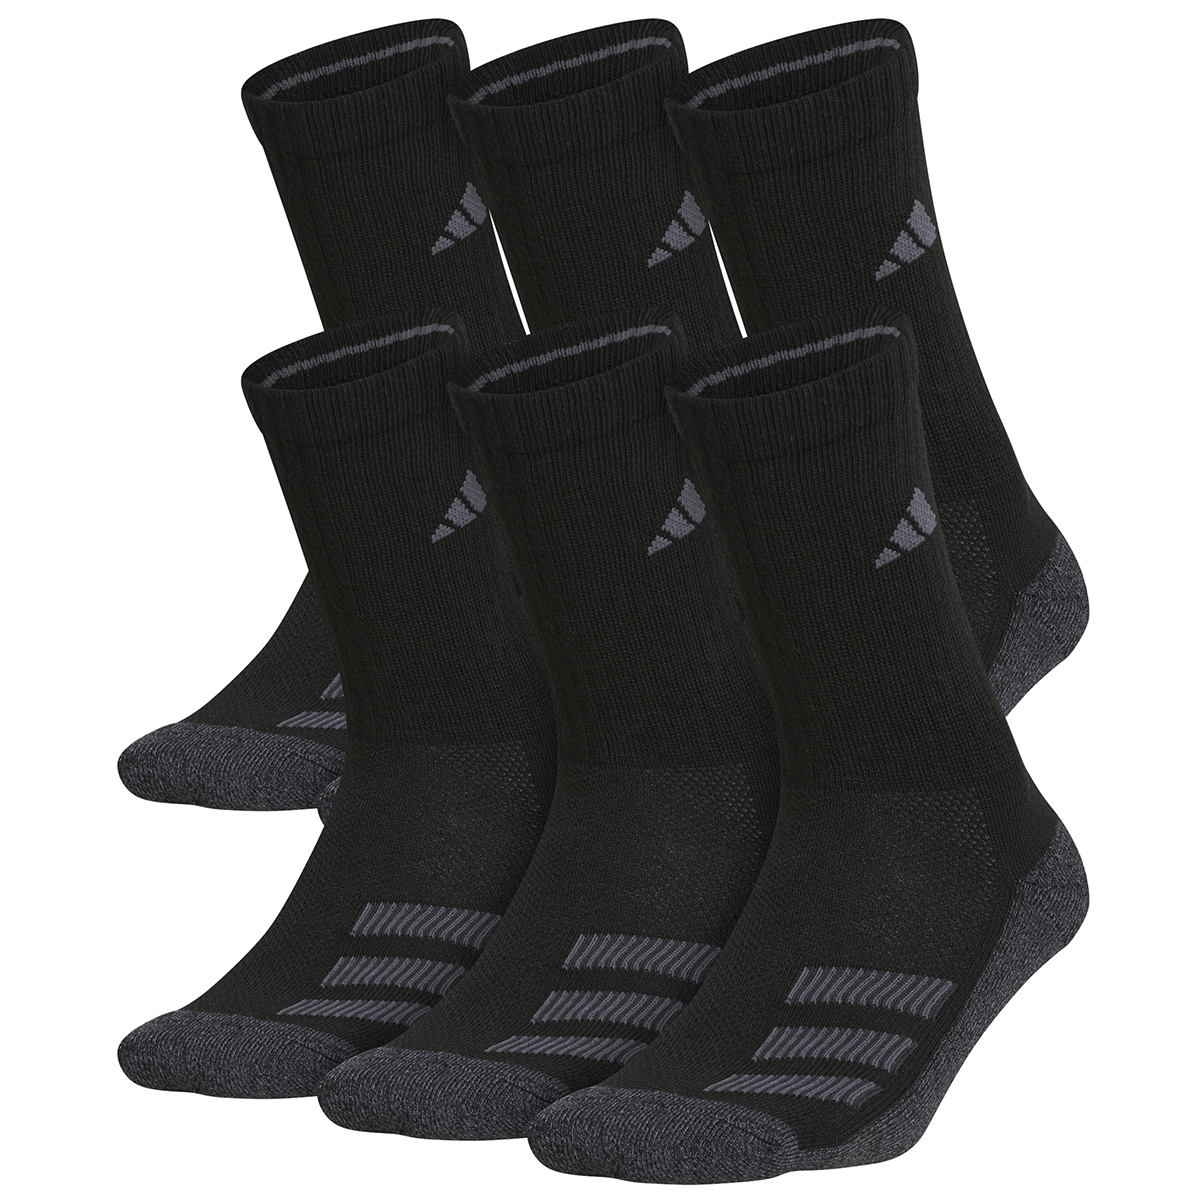 Adidas Youth Cushioned Angle Stripe Crew Socks, 6 Pack